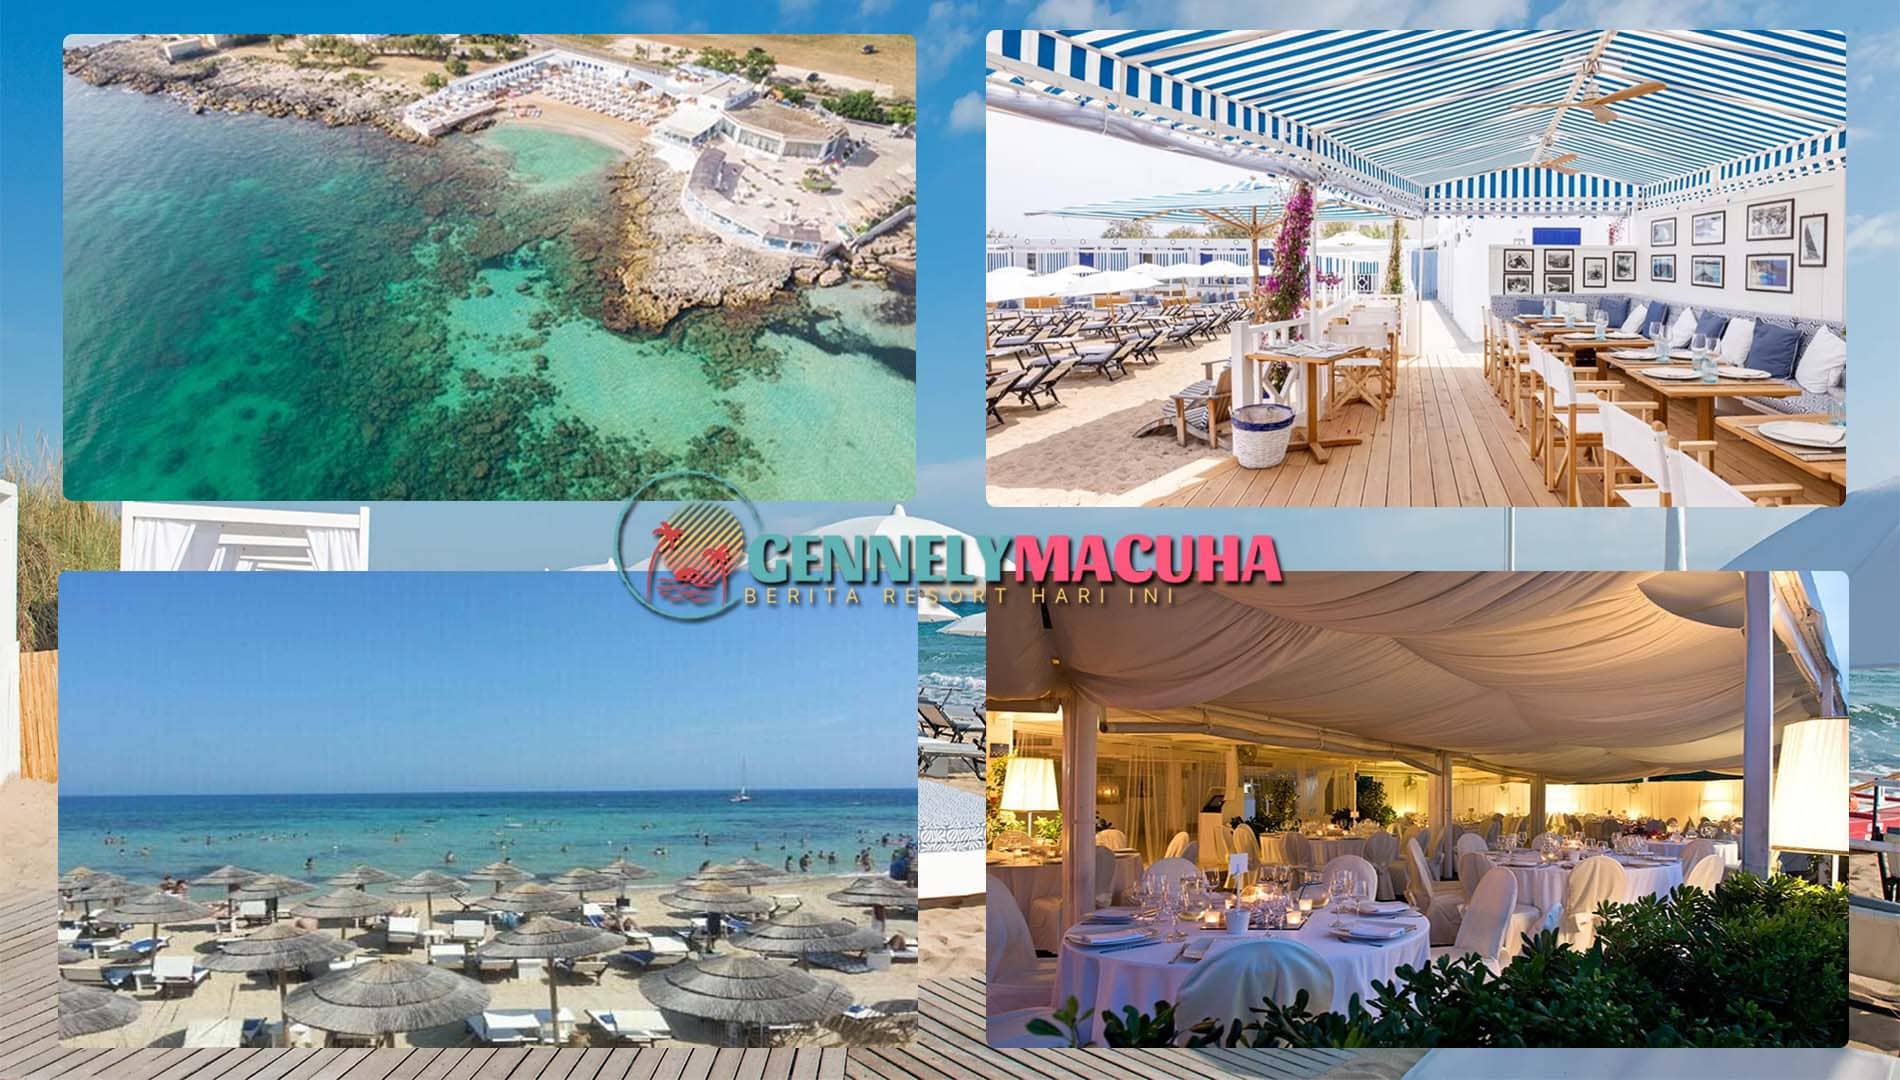 Coccaro Beach Club Puglia Resorts: An Unforgettable Italian Retreat